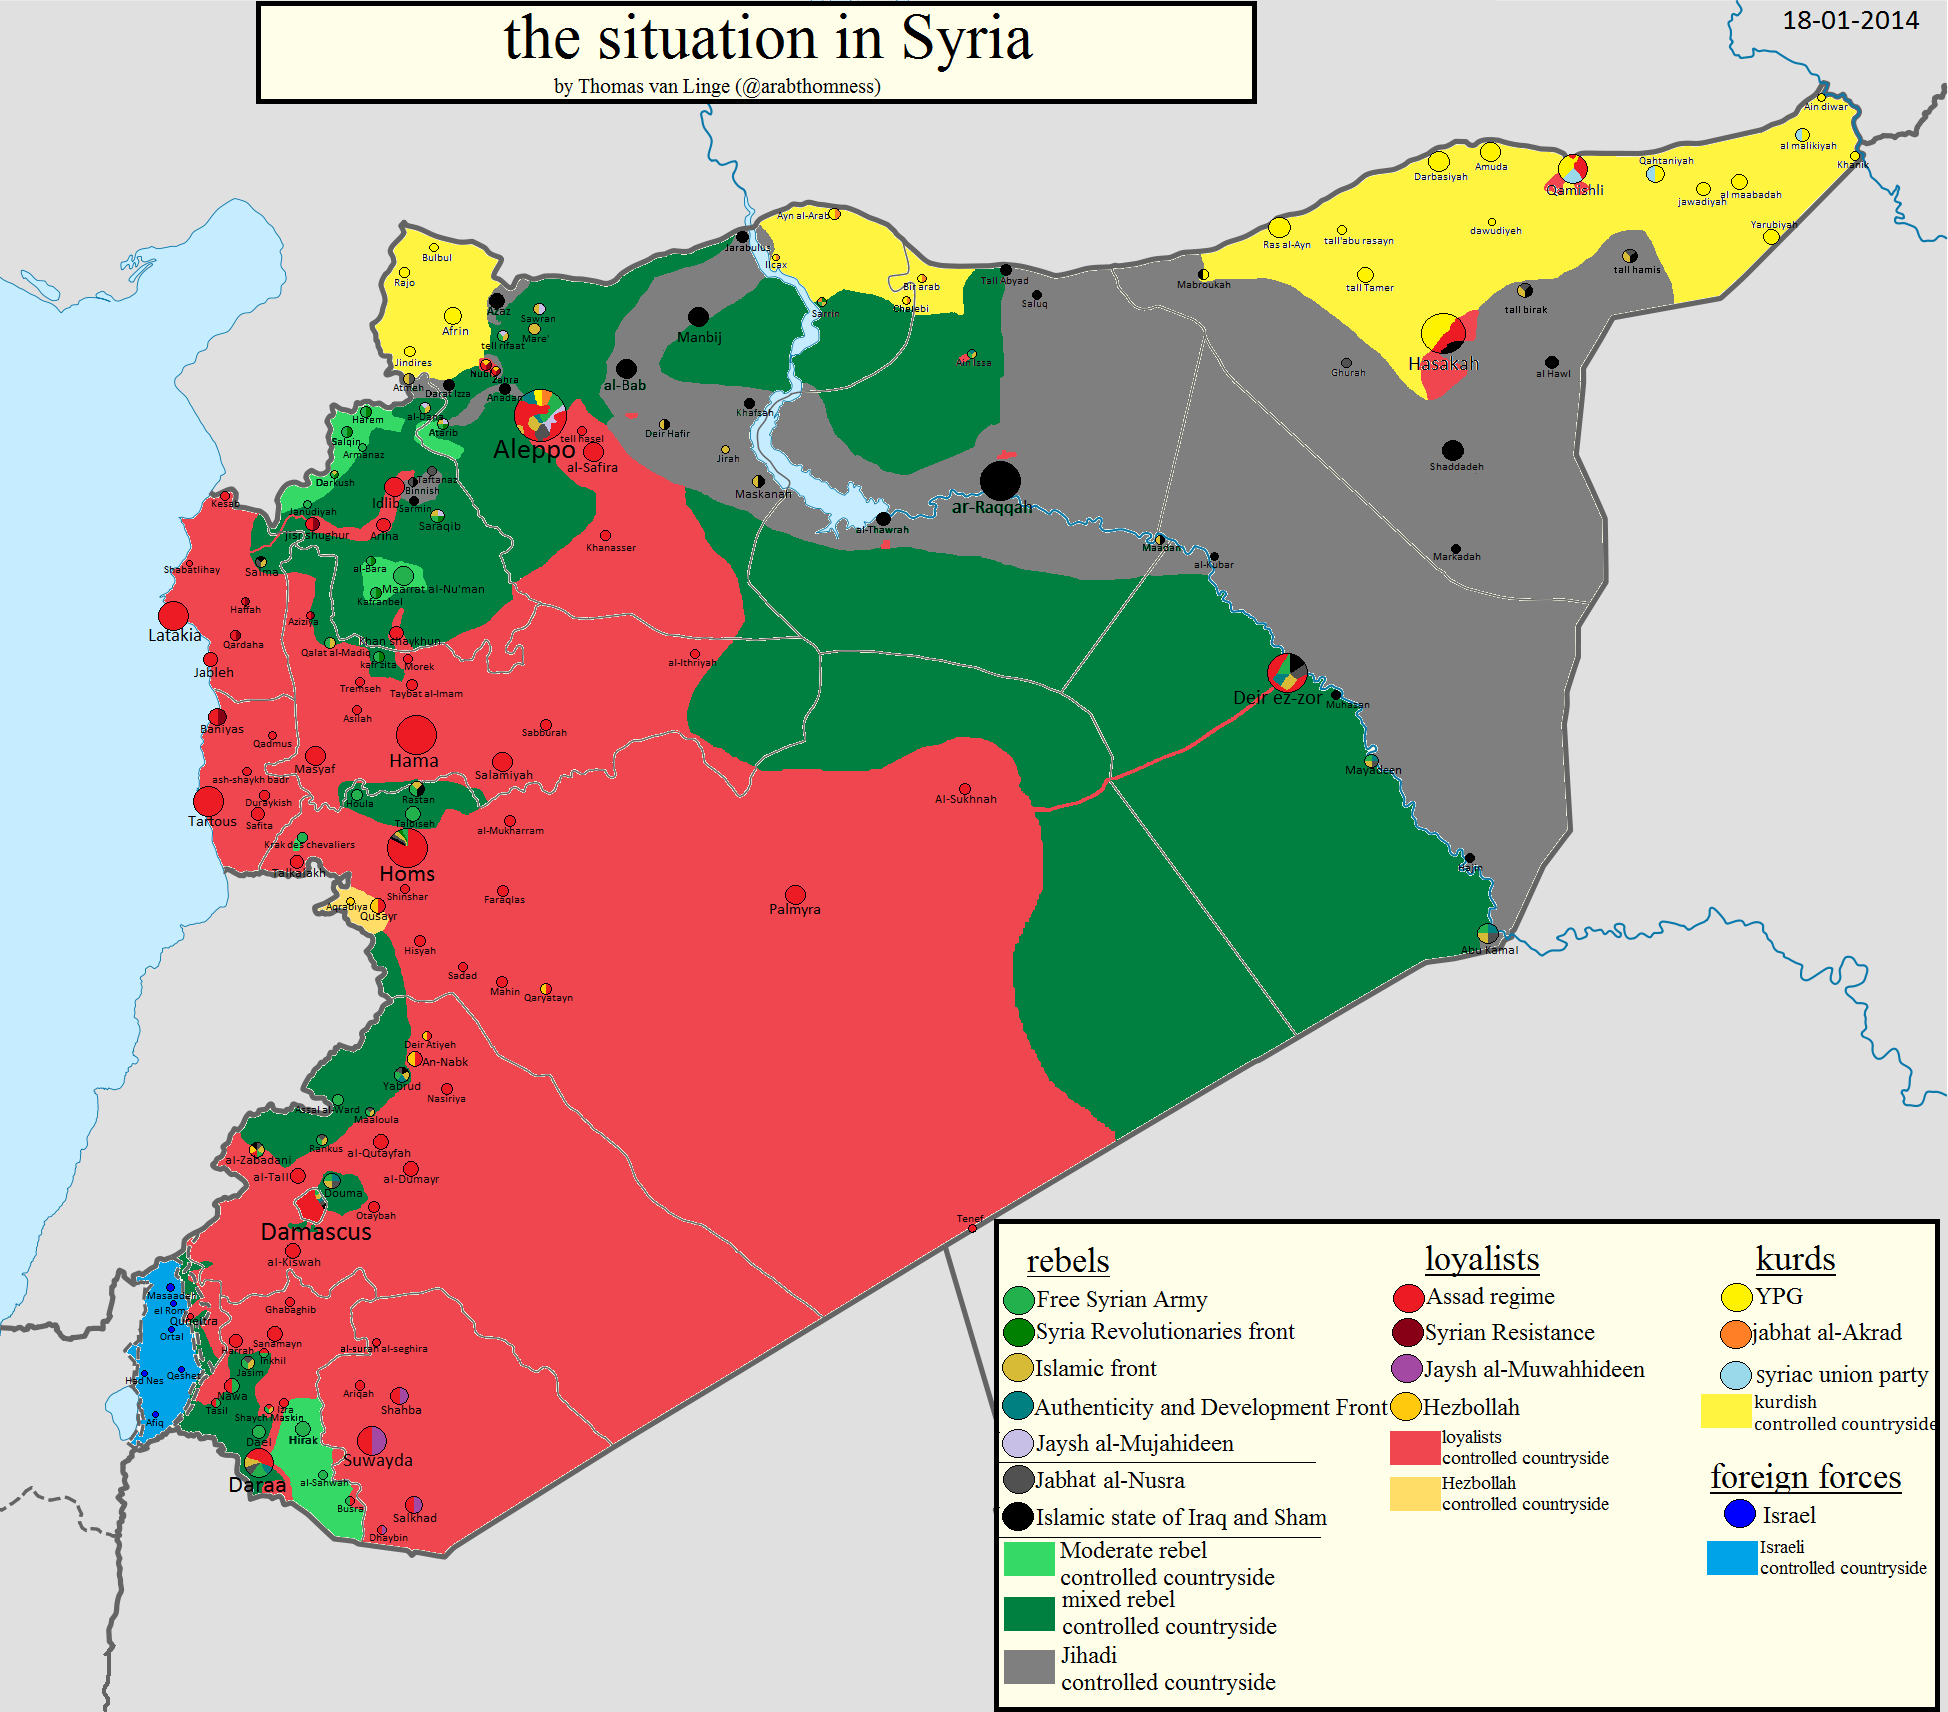 http://www.les-crises.fr/wp-content/uploads/2015/10/21-syrie-01-2014.png